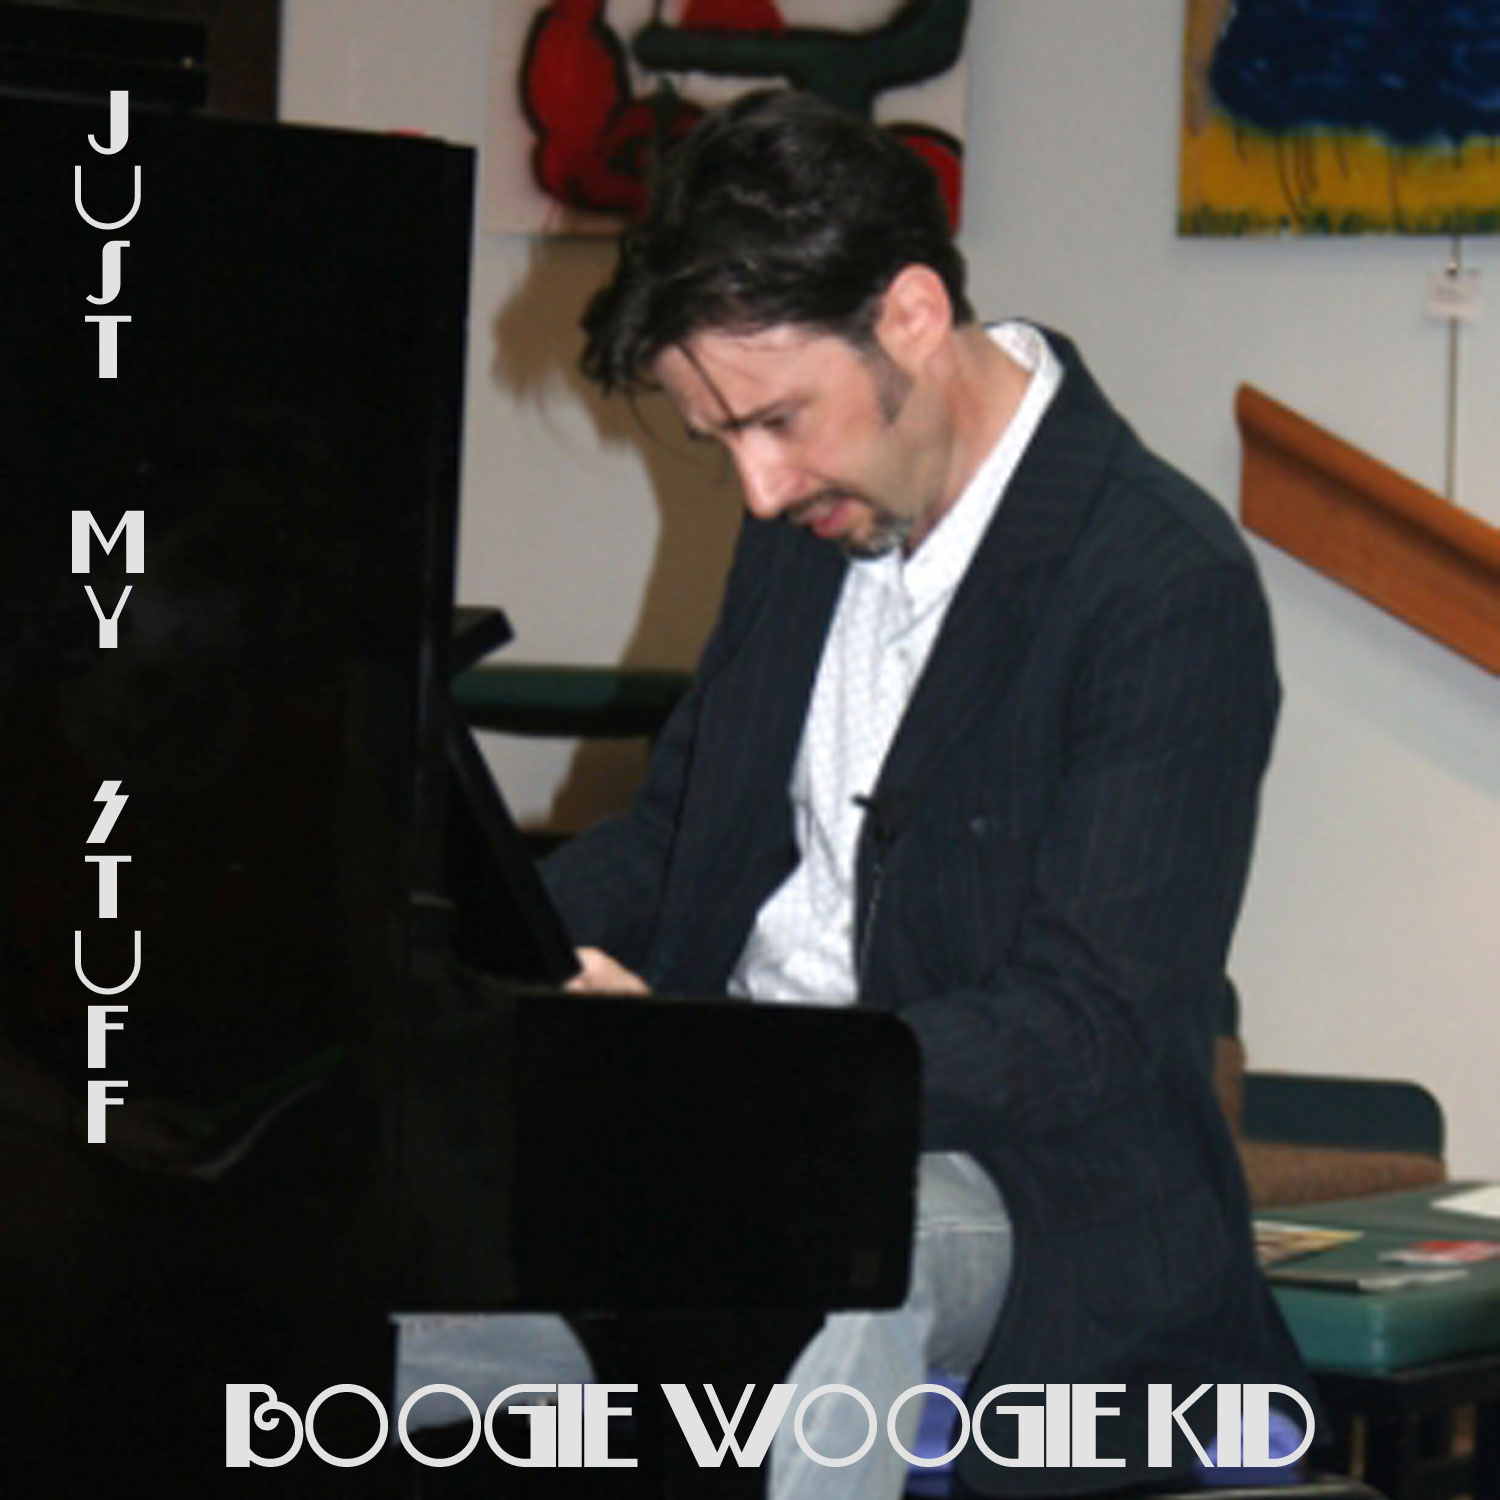 http://indiemusicpeople.com/uploads2/Matthew_Ball_aka_The_Boogie_Woogie_Kid_-_Just-my-Stuff-cover.jpg